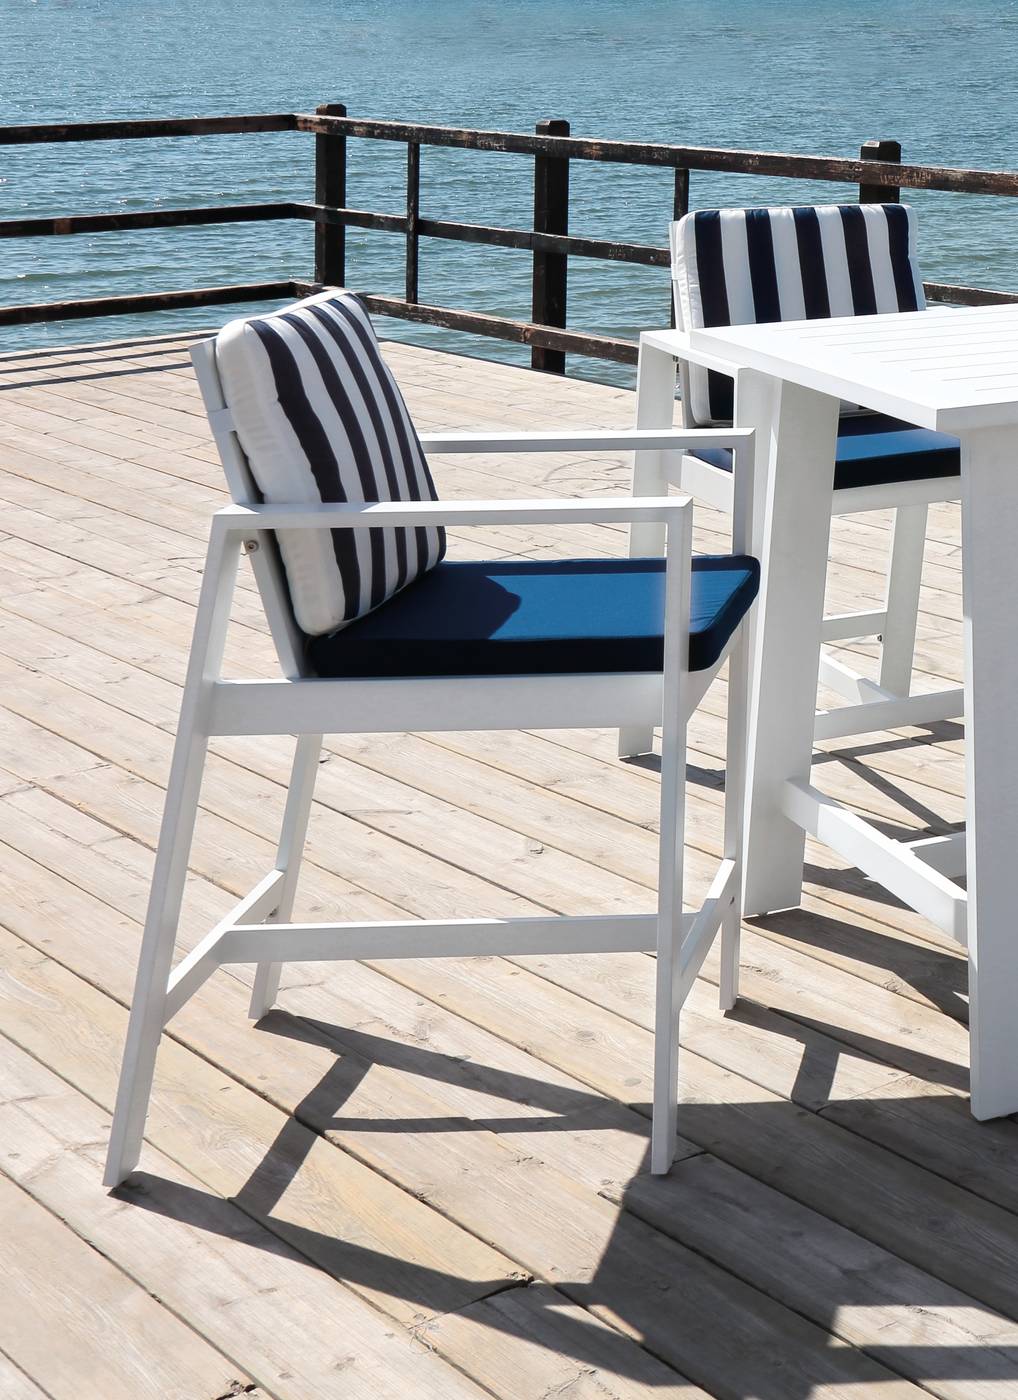 Lujoso sillón alto de coctel, para jardín o terraza. Disponible en color blanco, antracita, champagne, plata o marrón.